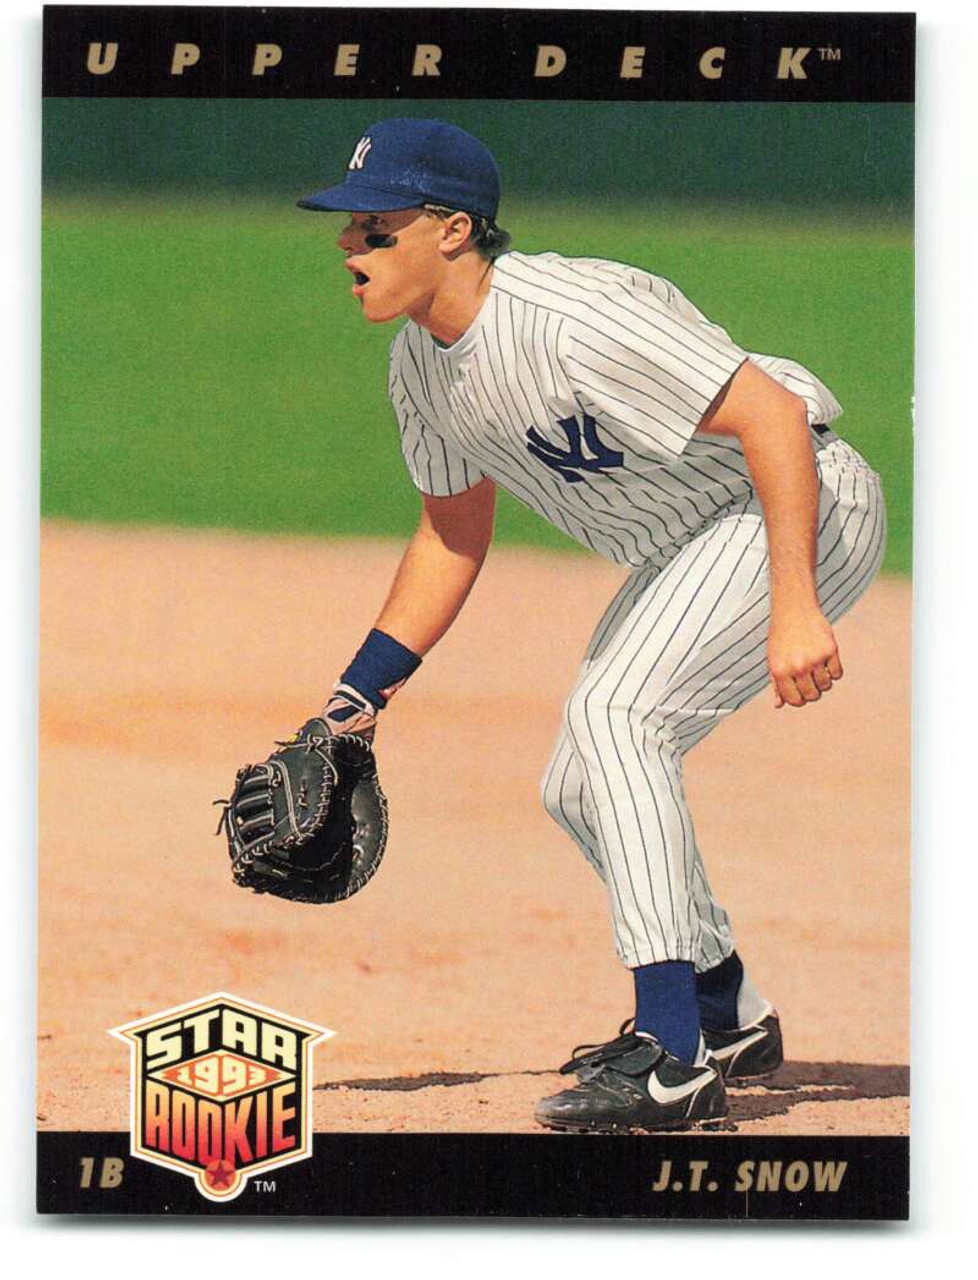  1993 Upper Deck #449 Derek Jeter New York Yankees RC